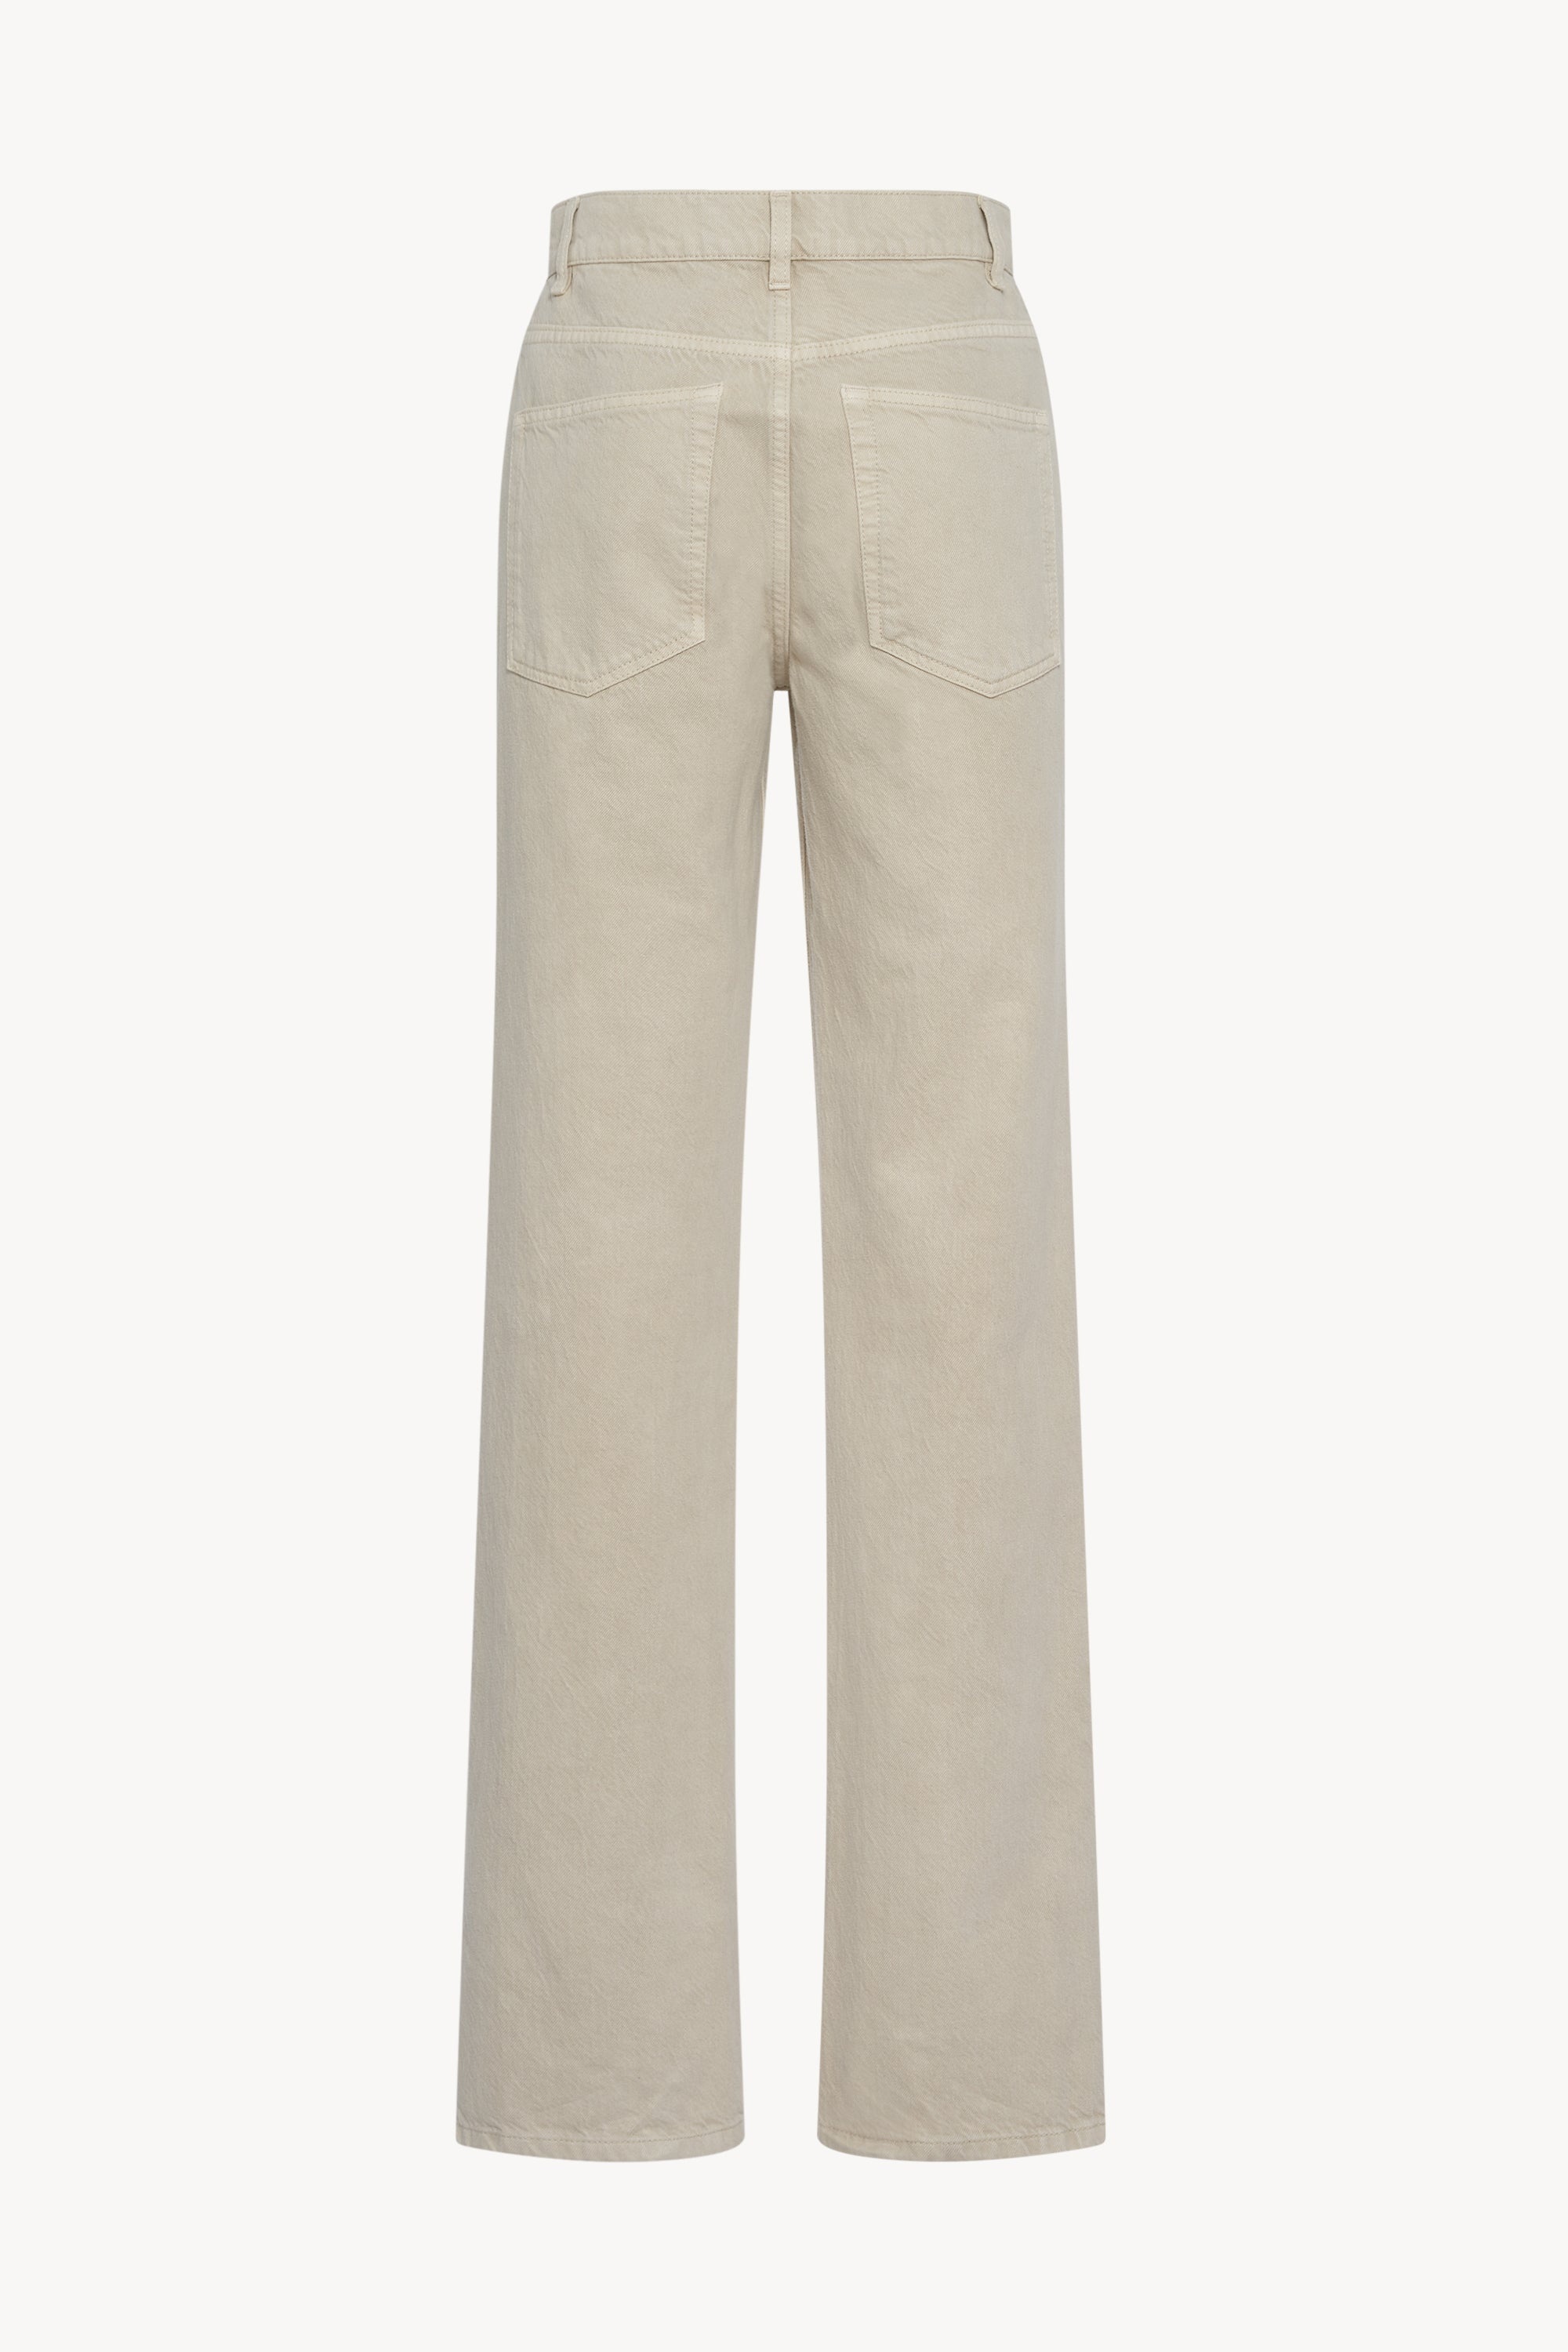 Carlton Jeans in Cotton - 2